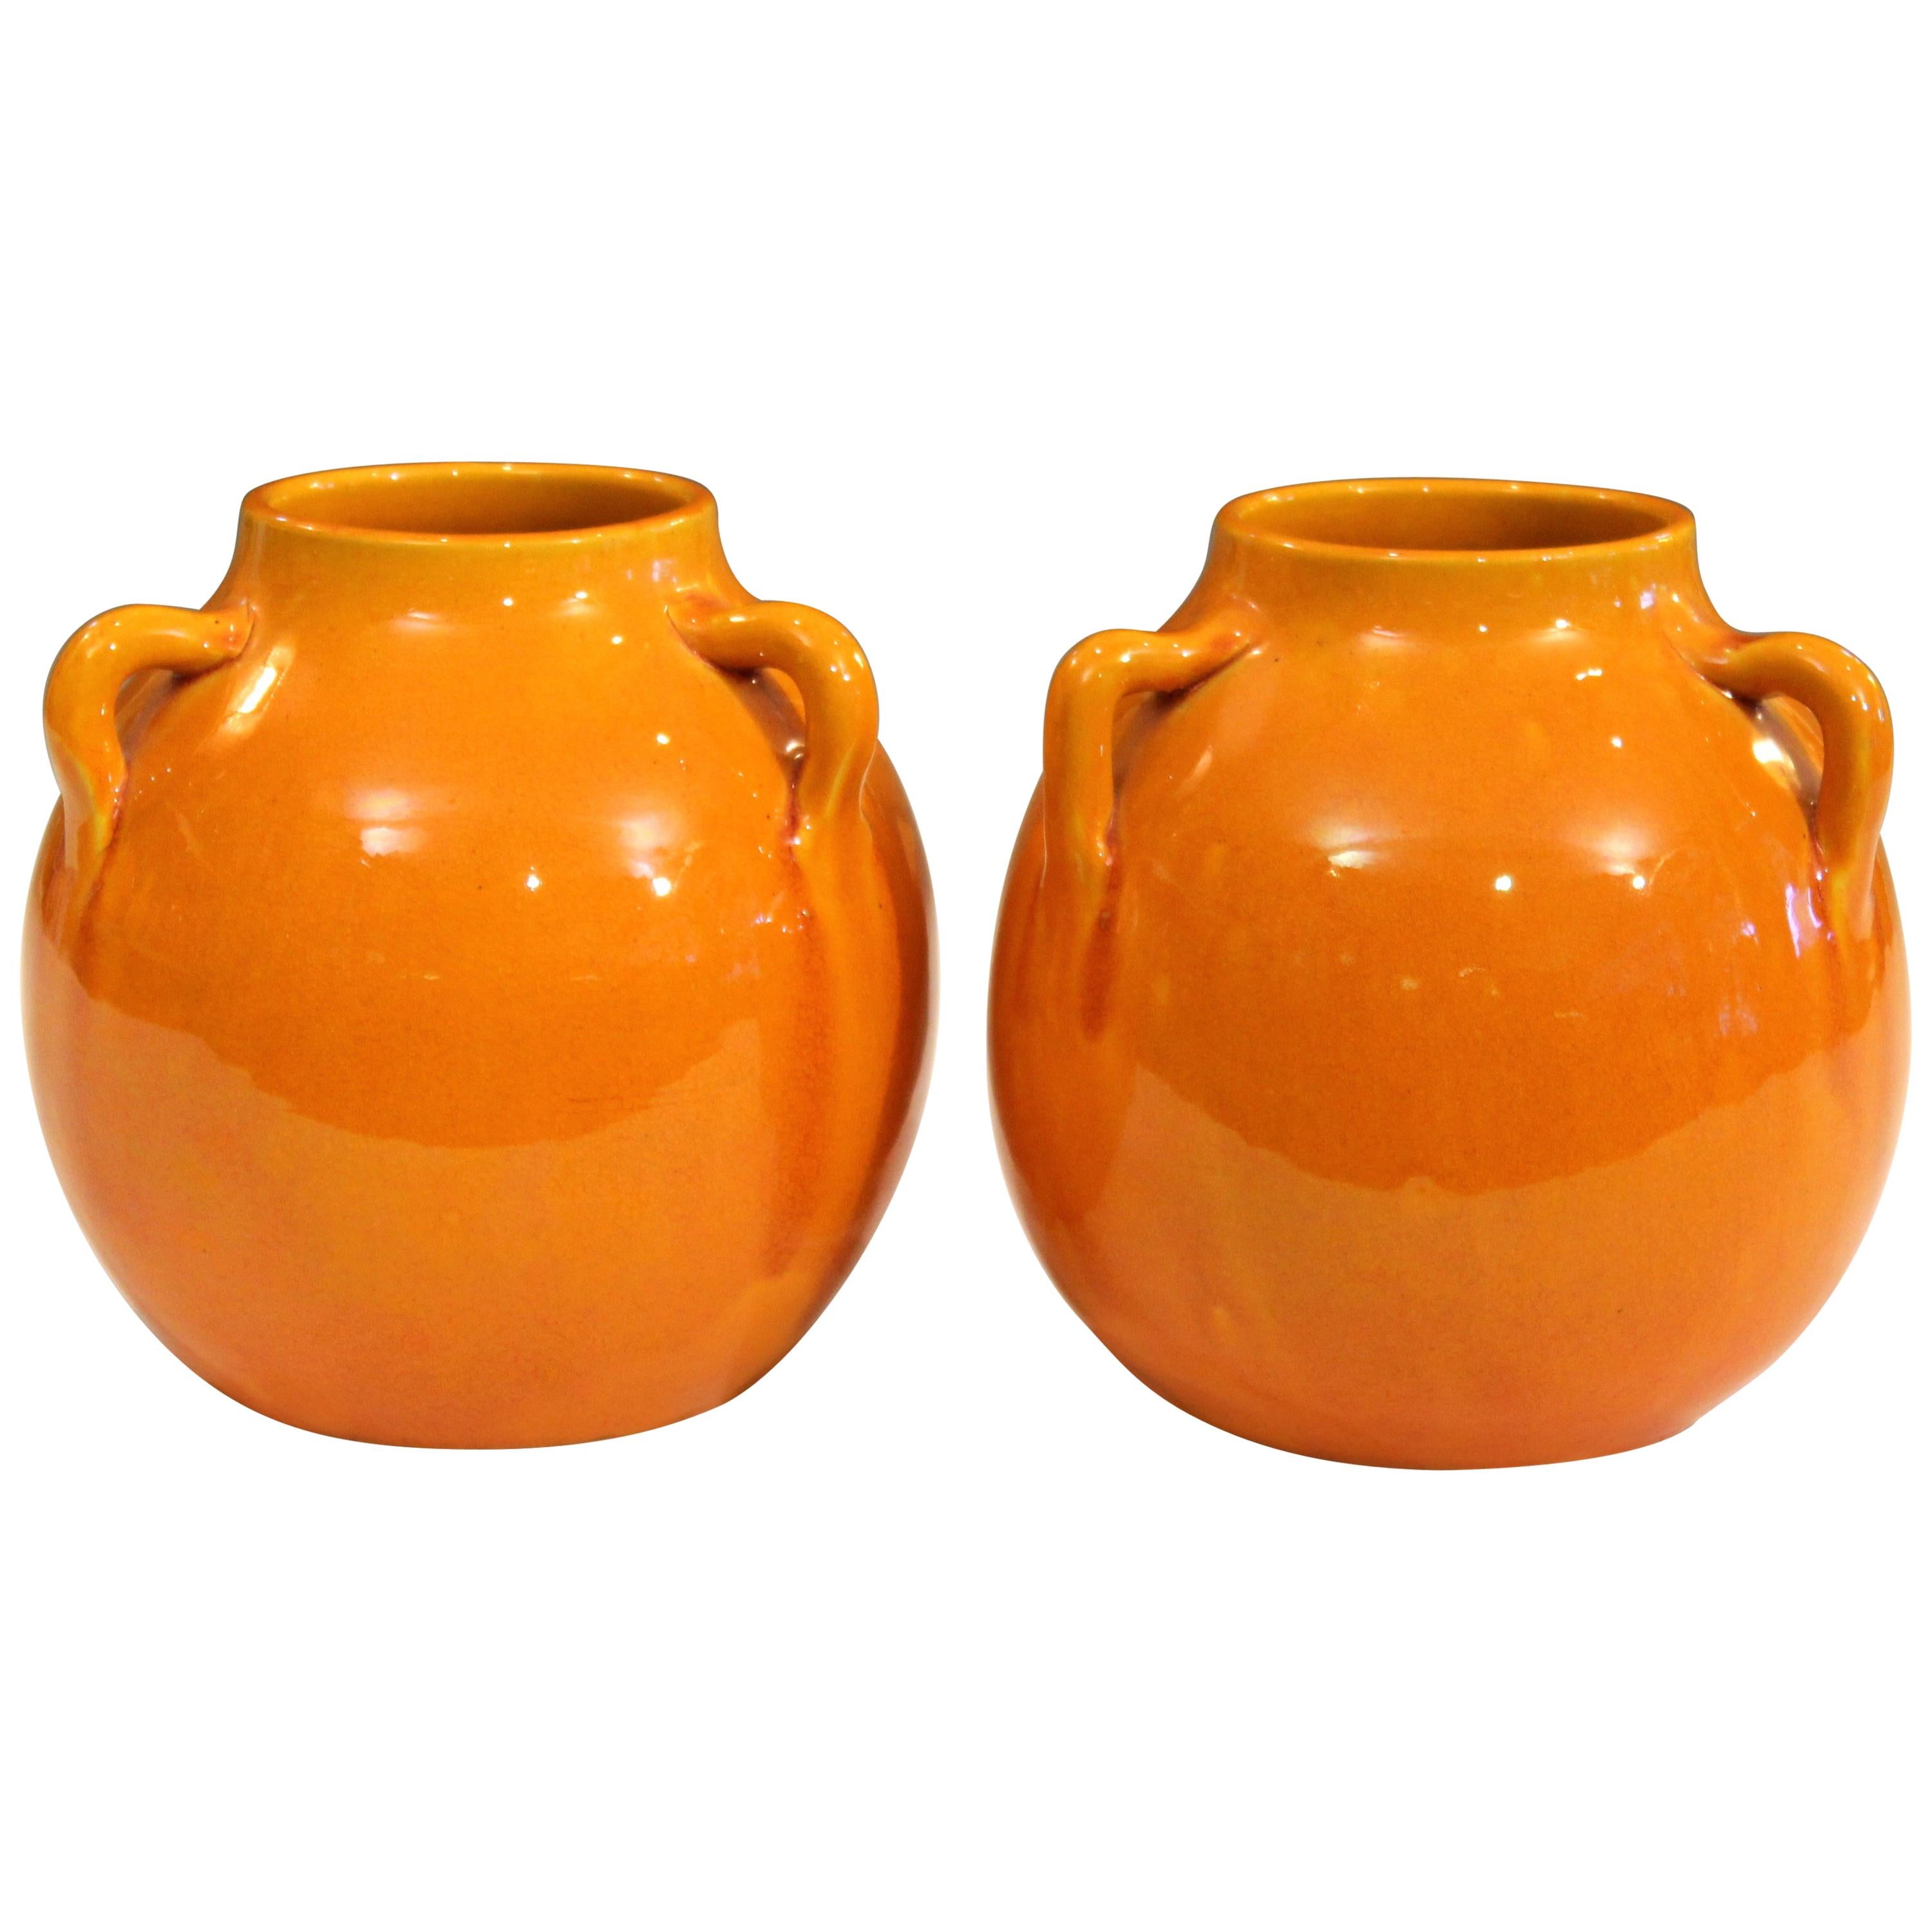 Pair of Awaji Pottery Vases in Warm Yellow Glaze